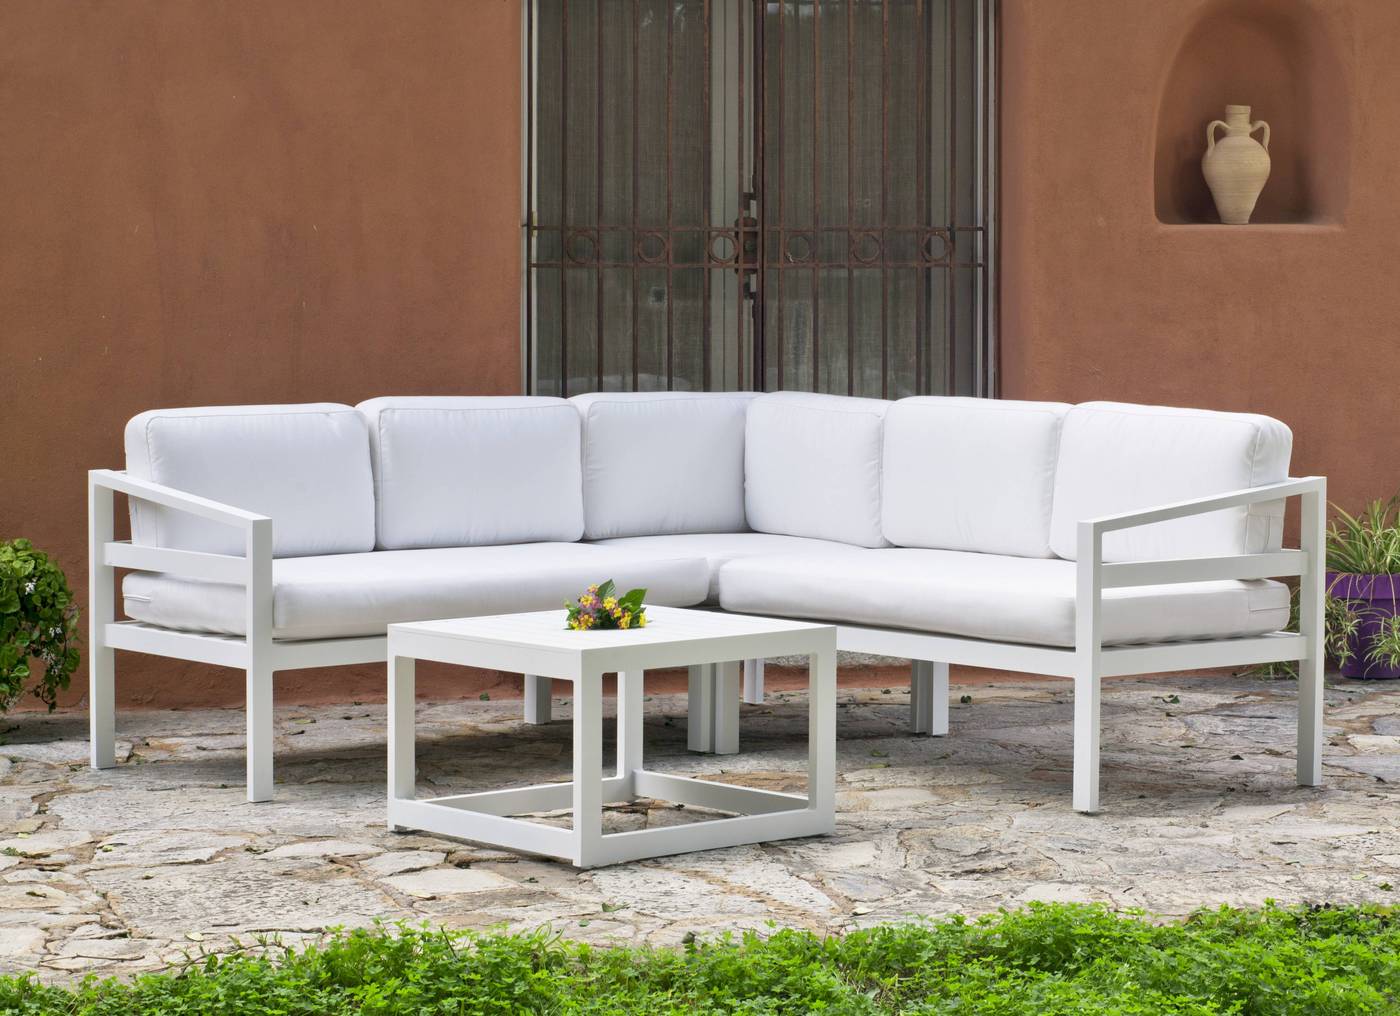 Rinconera modular de aluminio luxe color blanco o antracita: 2 sofás laterales + 1 módulo rinconera central + mesa centro cuadrada +  cojines.